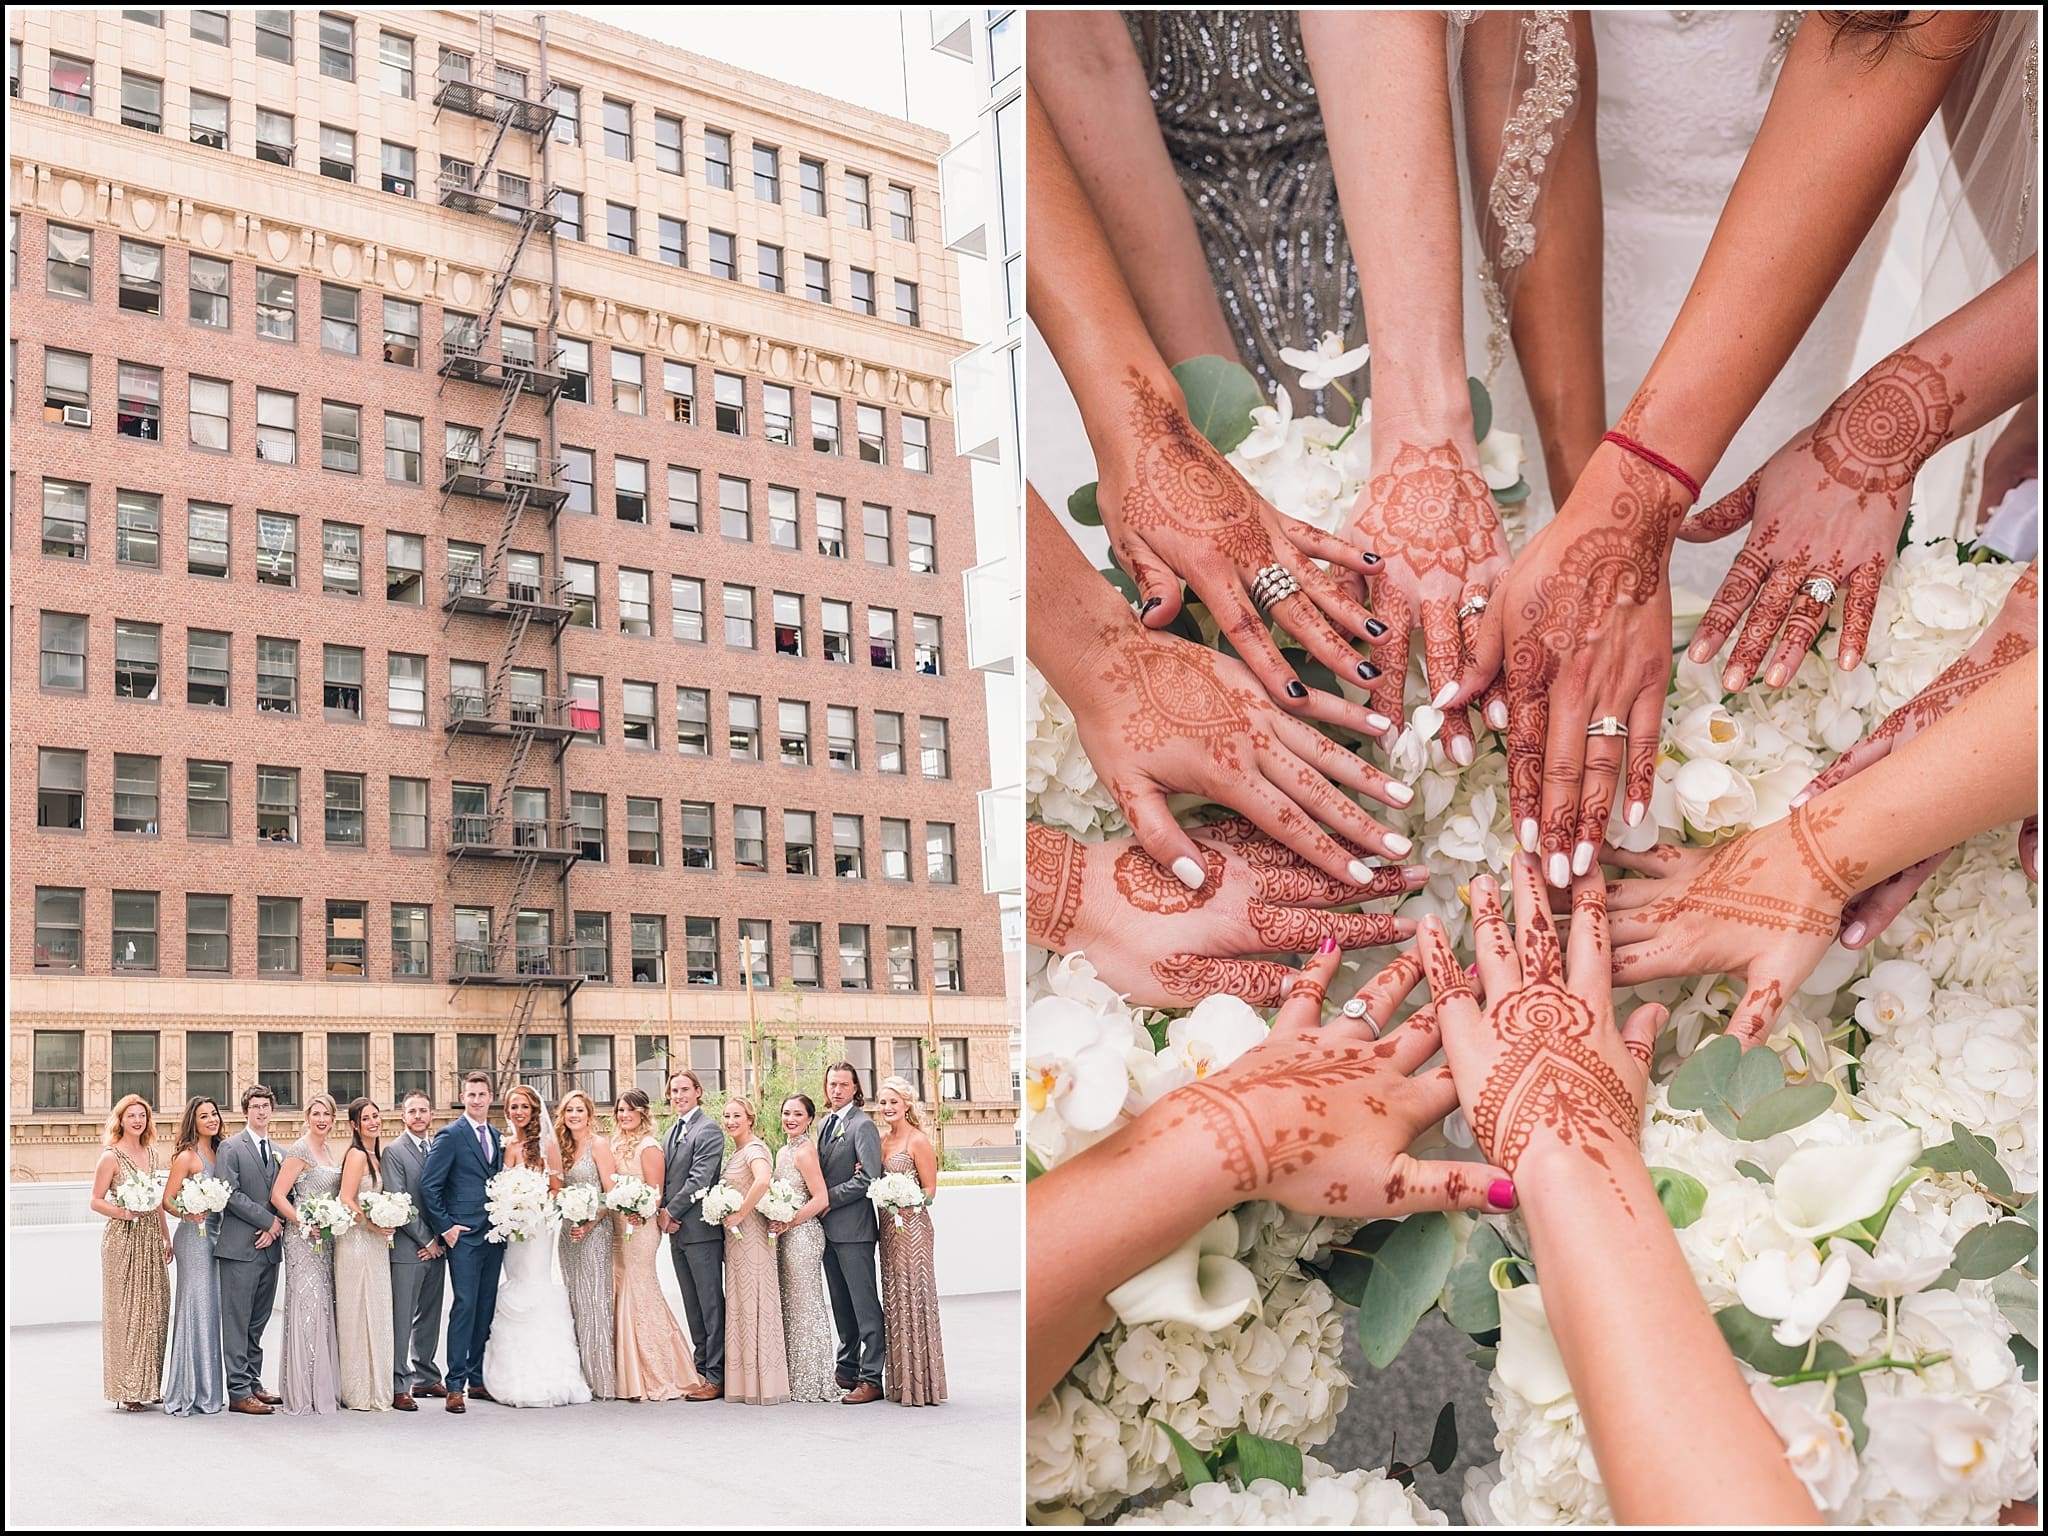  favorite wedding images 2016, wedding photos from 2016, our favorite wedding photos, downtown LA wedding, bridal henna